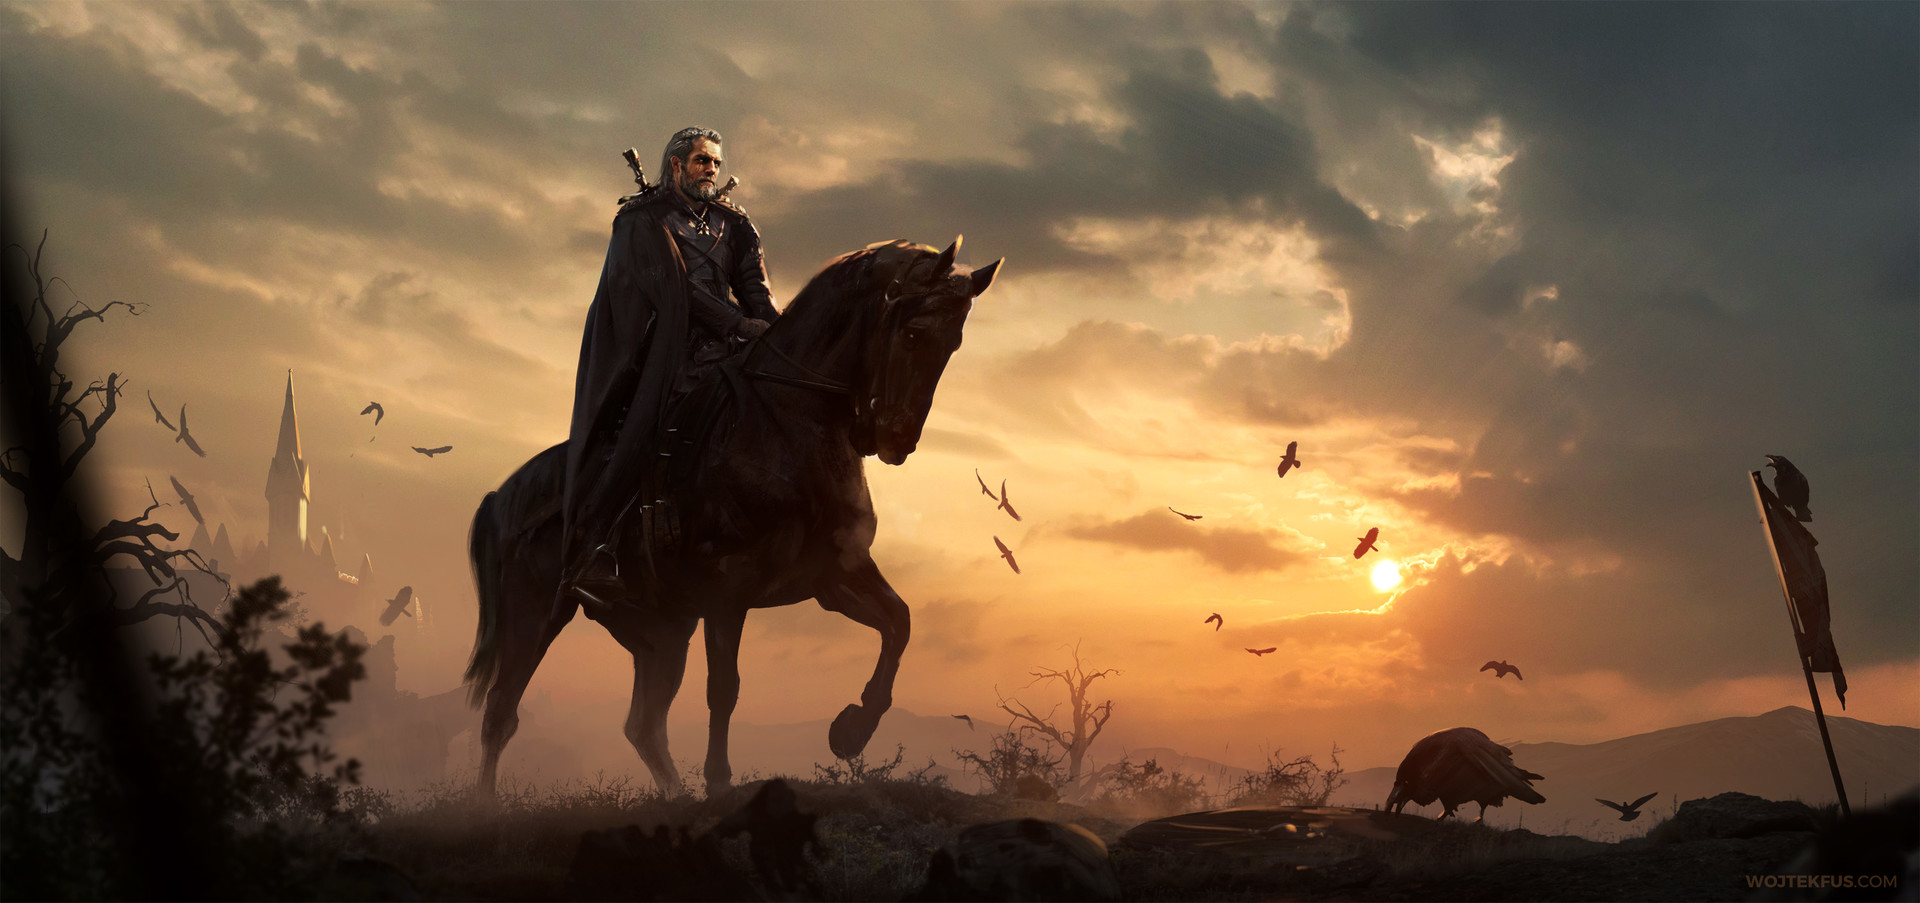 General 1920x903 digital art artwork video games The Witcher Geralt of Rivia The Witcher 3: Wild Hunt horse Roach